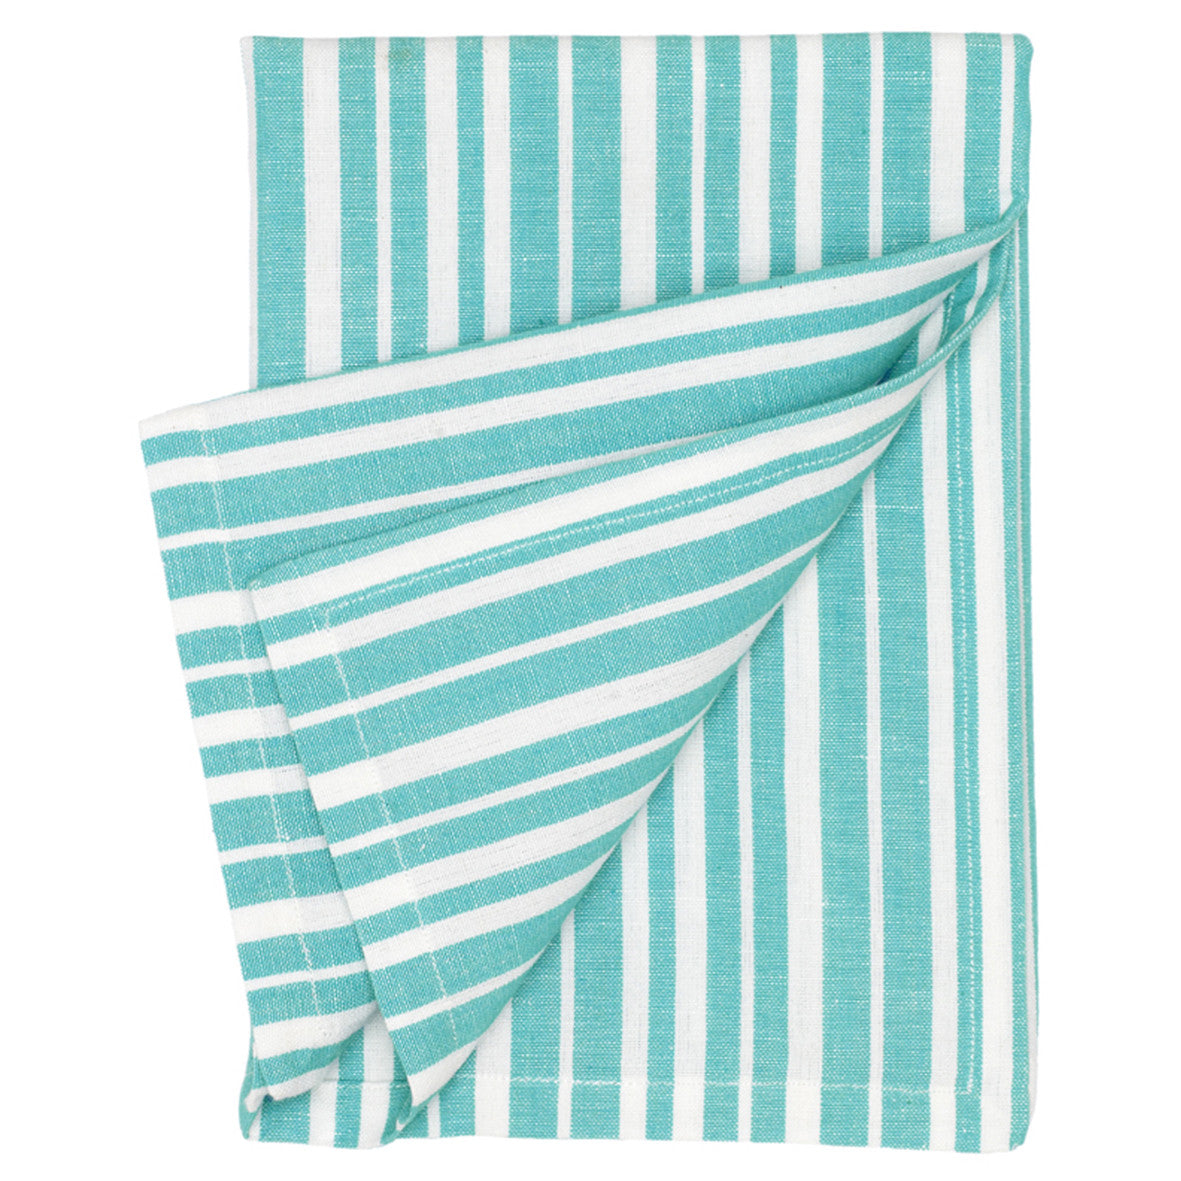 Palermo Ticking Stripe Cotton Linen Napkin in Turquoise Blue